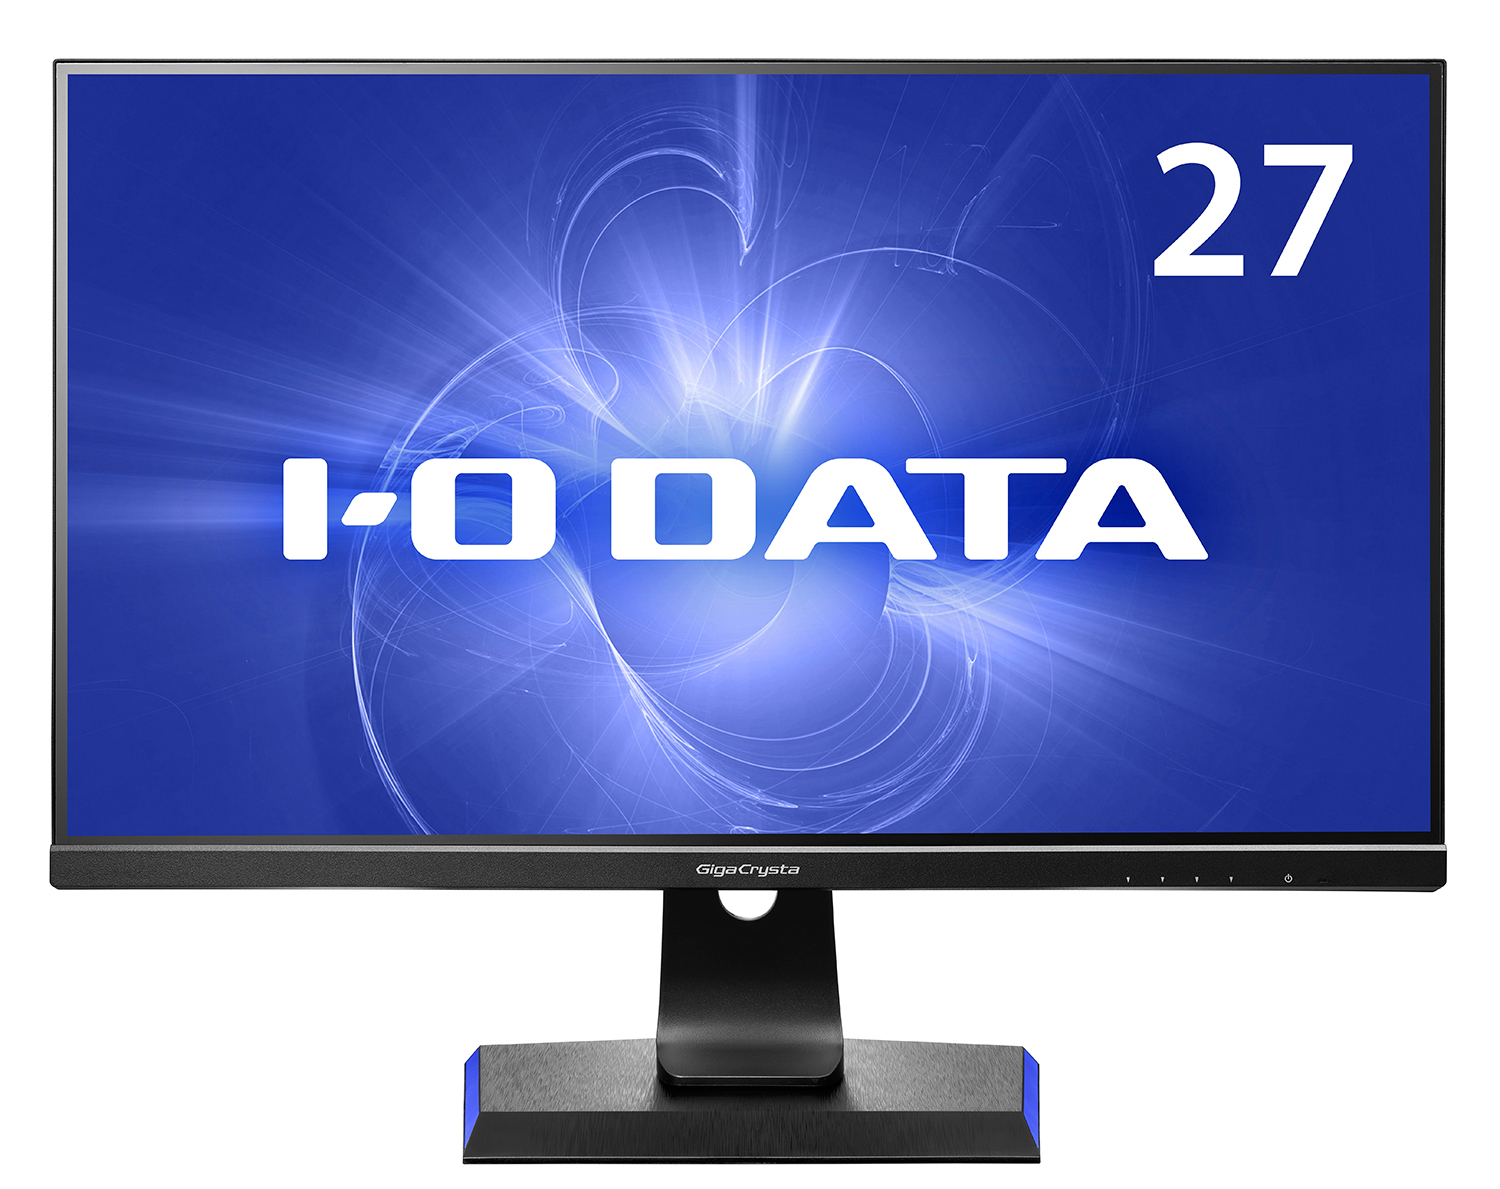 LCD-GC271HXB | ゲーミングモニター「GigaCrysta」 | IODATA アイ・オー・データ機器